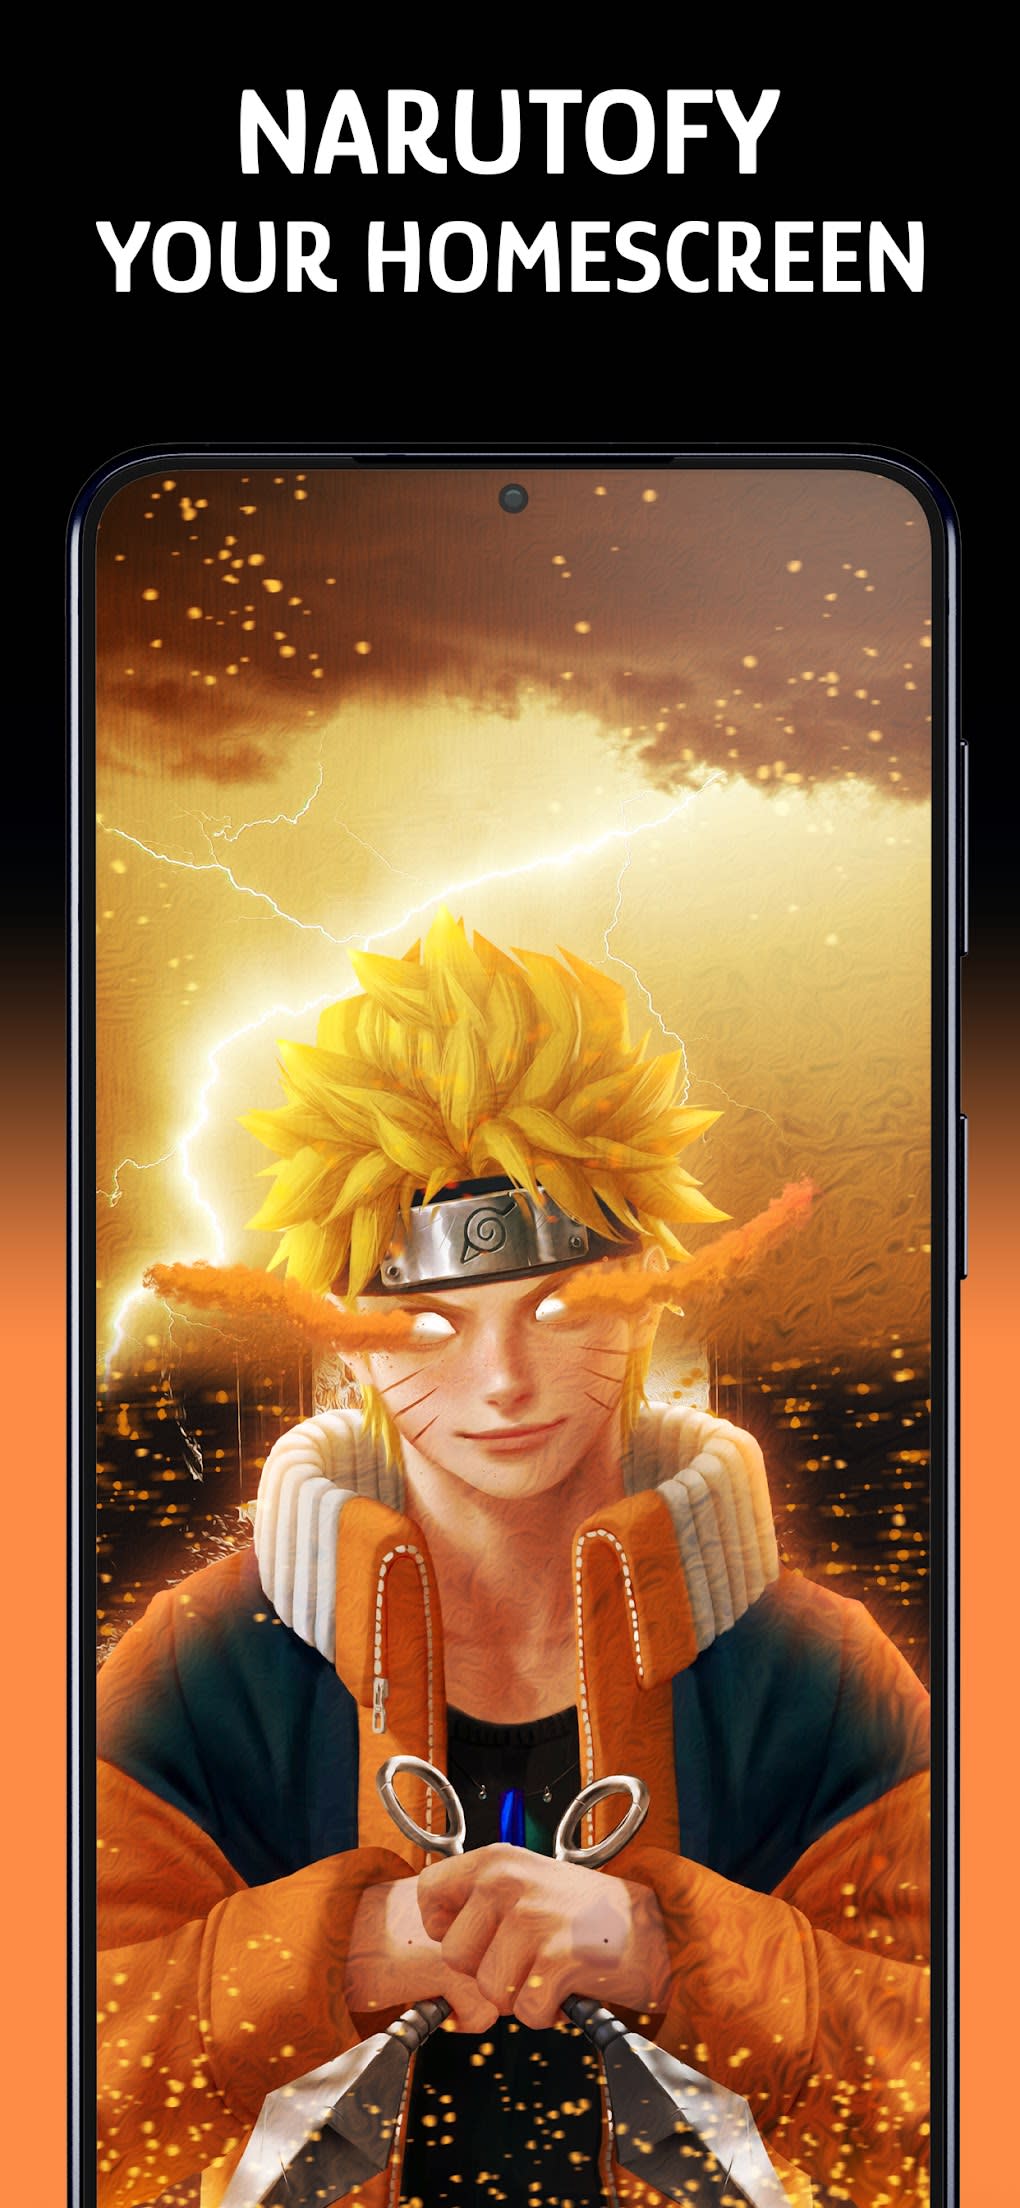 Naruto Wallpaper for Phone